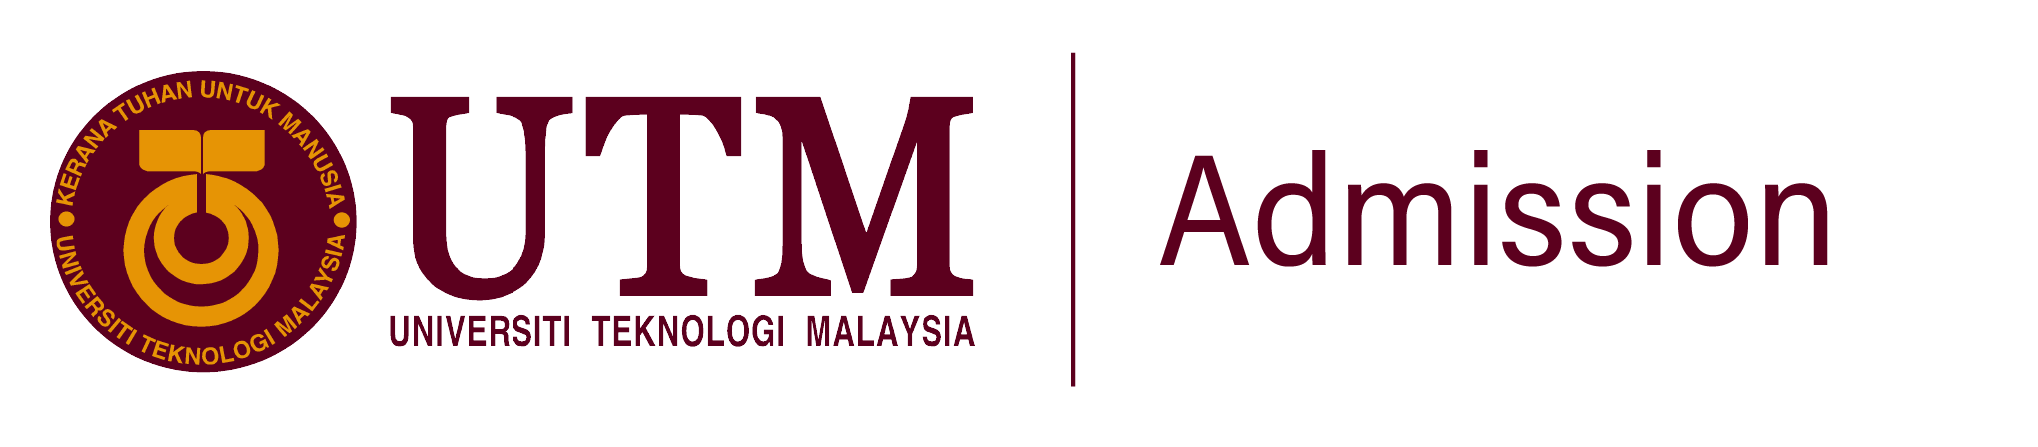 online phd programs malaysia